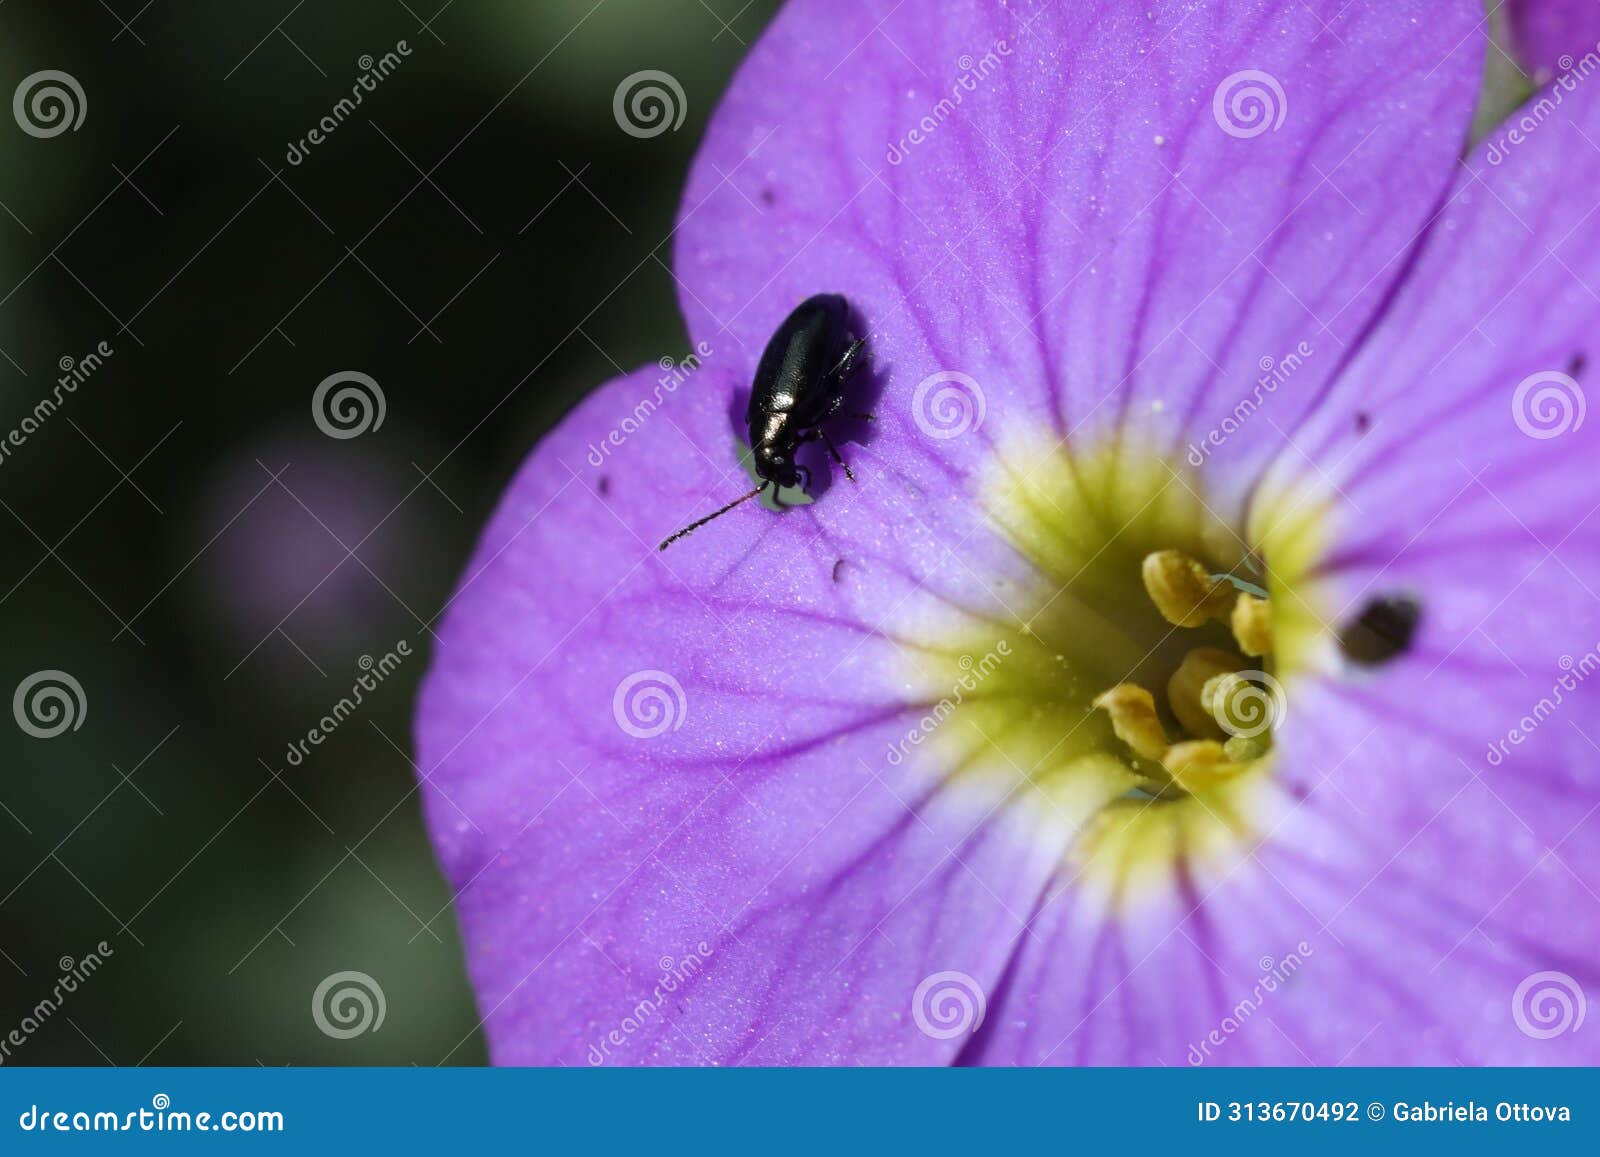 phyllotreta cruciferae on purple aubrieta flower